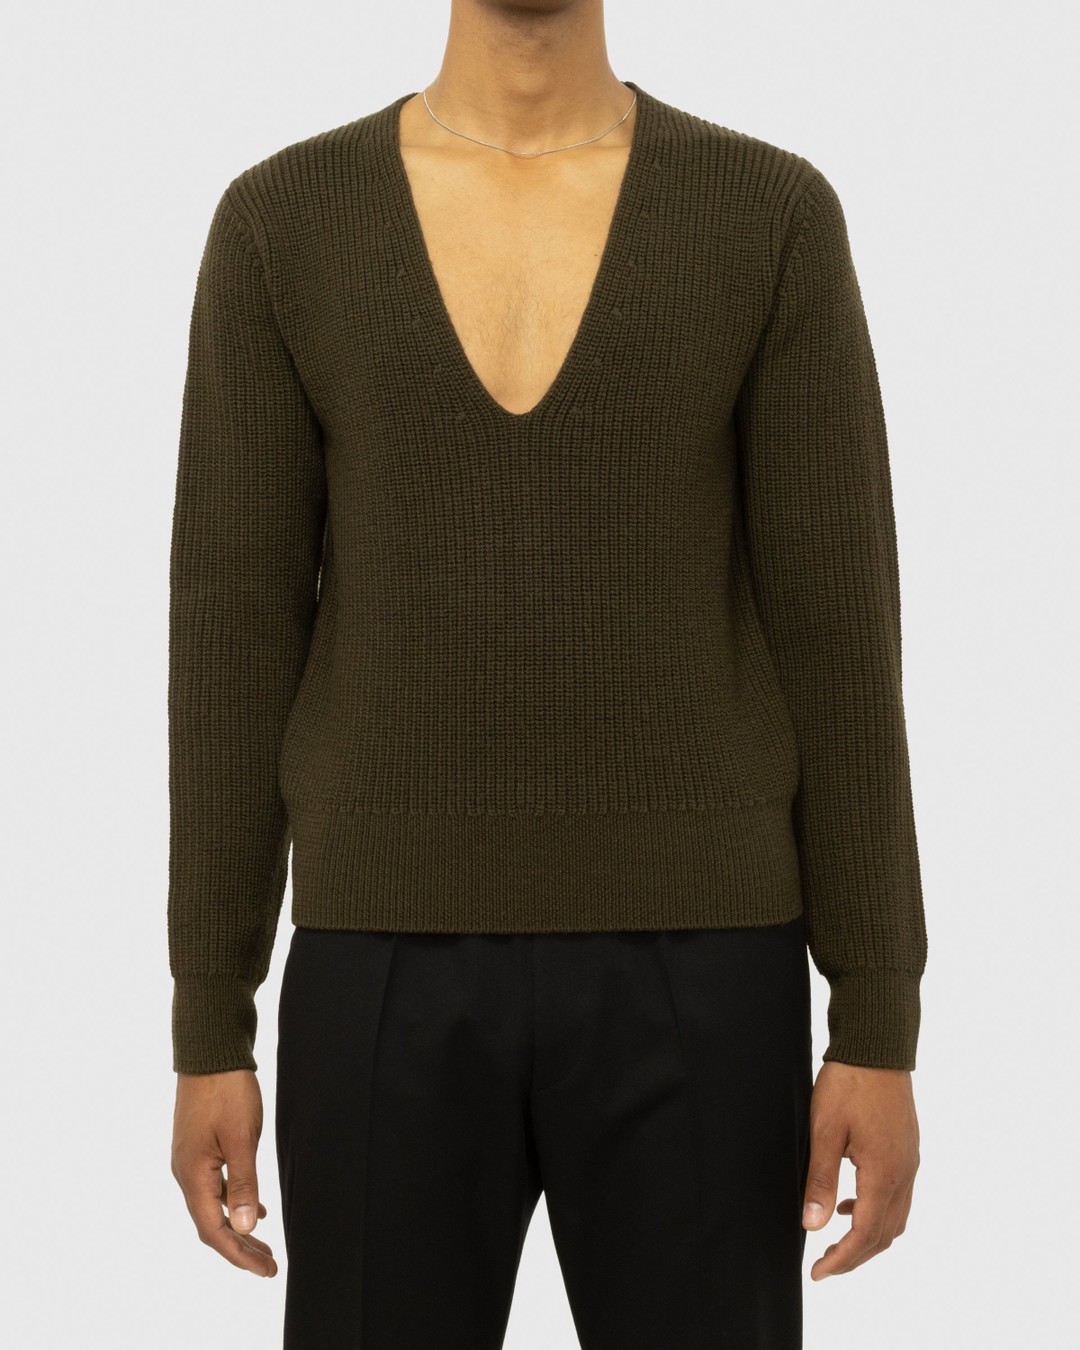 Dries van Noten – Newton Merino Sweater Green - Knitwear - Green - Image 3